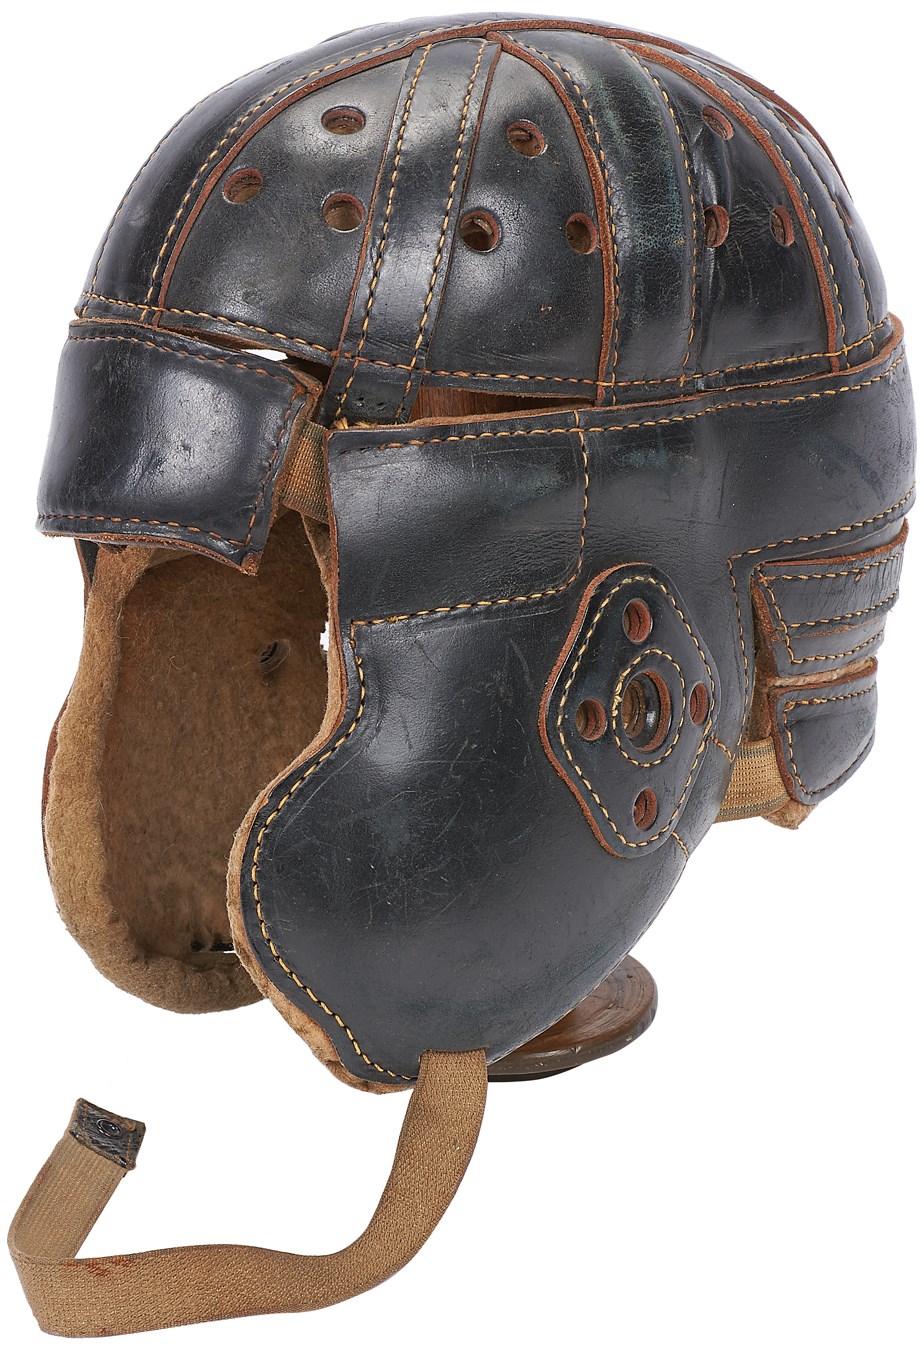 Antique Sporting Goods - 1920s Draper & Maynard Helmet with Elongated Ear Flaps